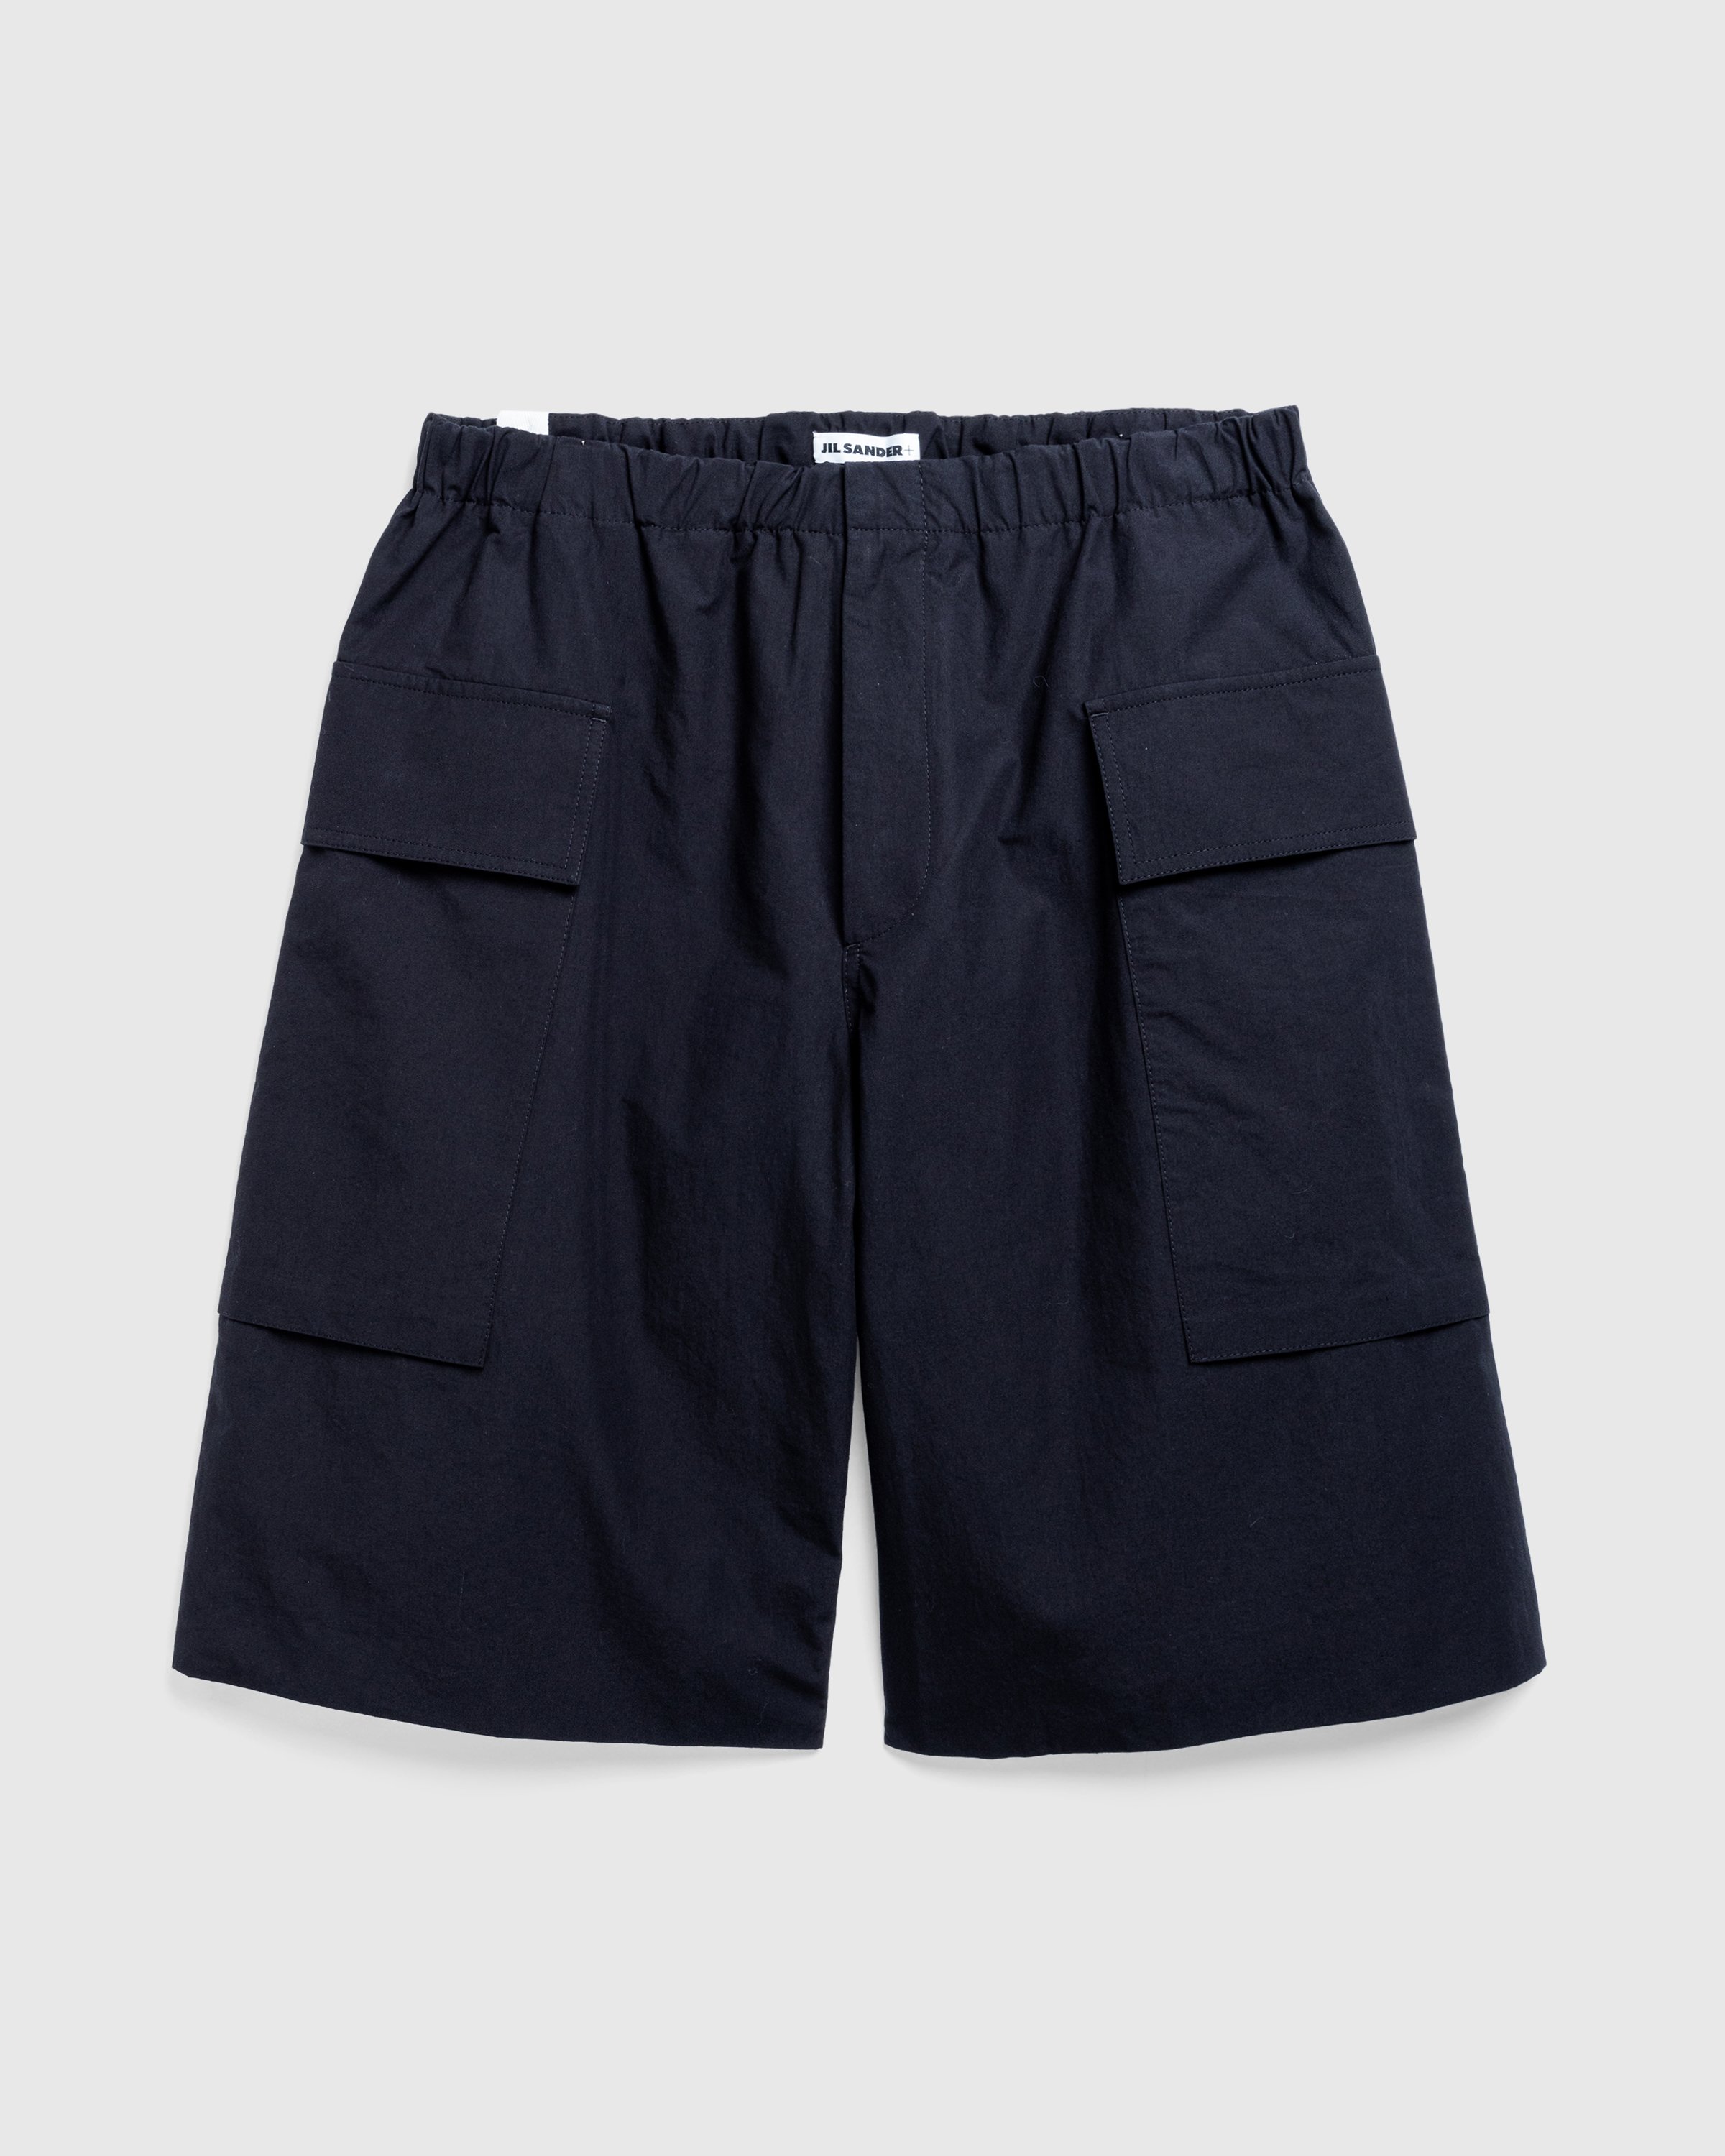 Jil Sander - Trouser 94 Short - Clothing - Black - Image 1